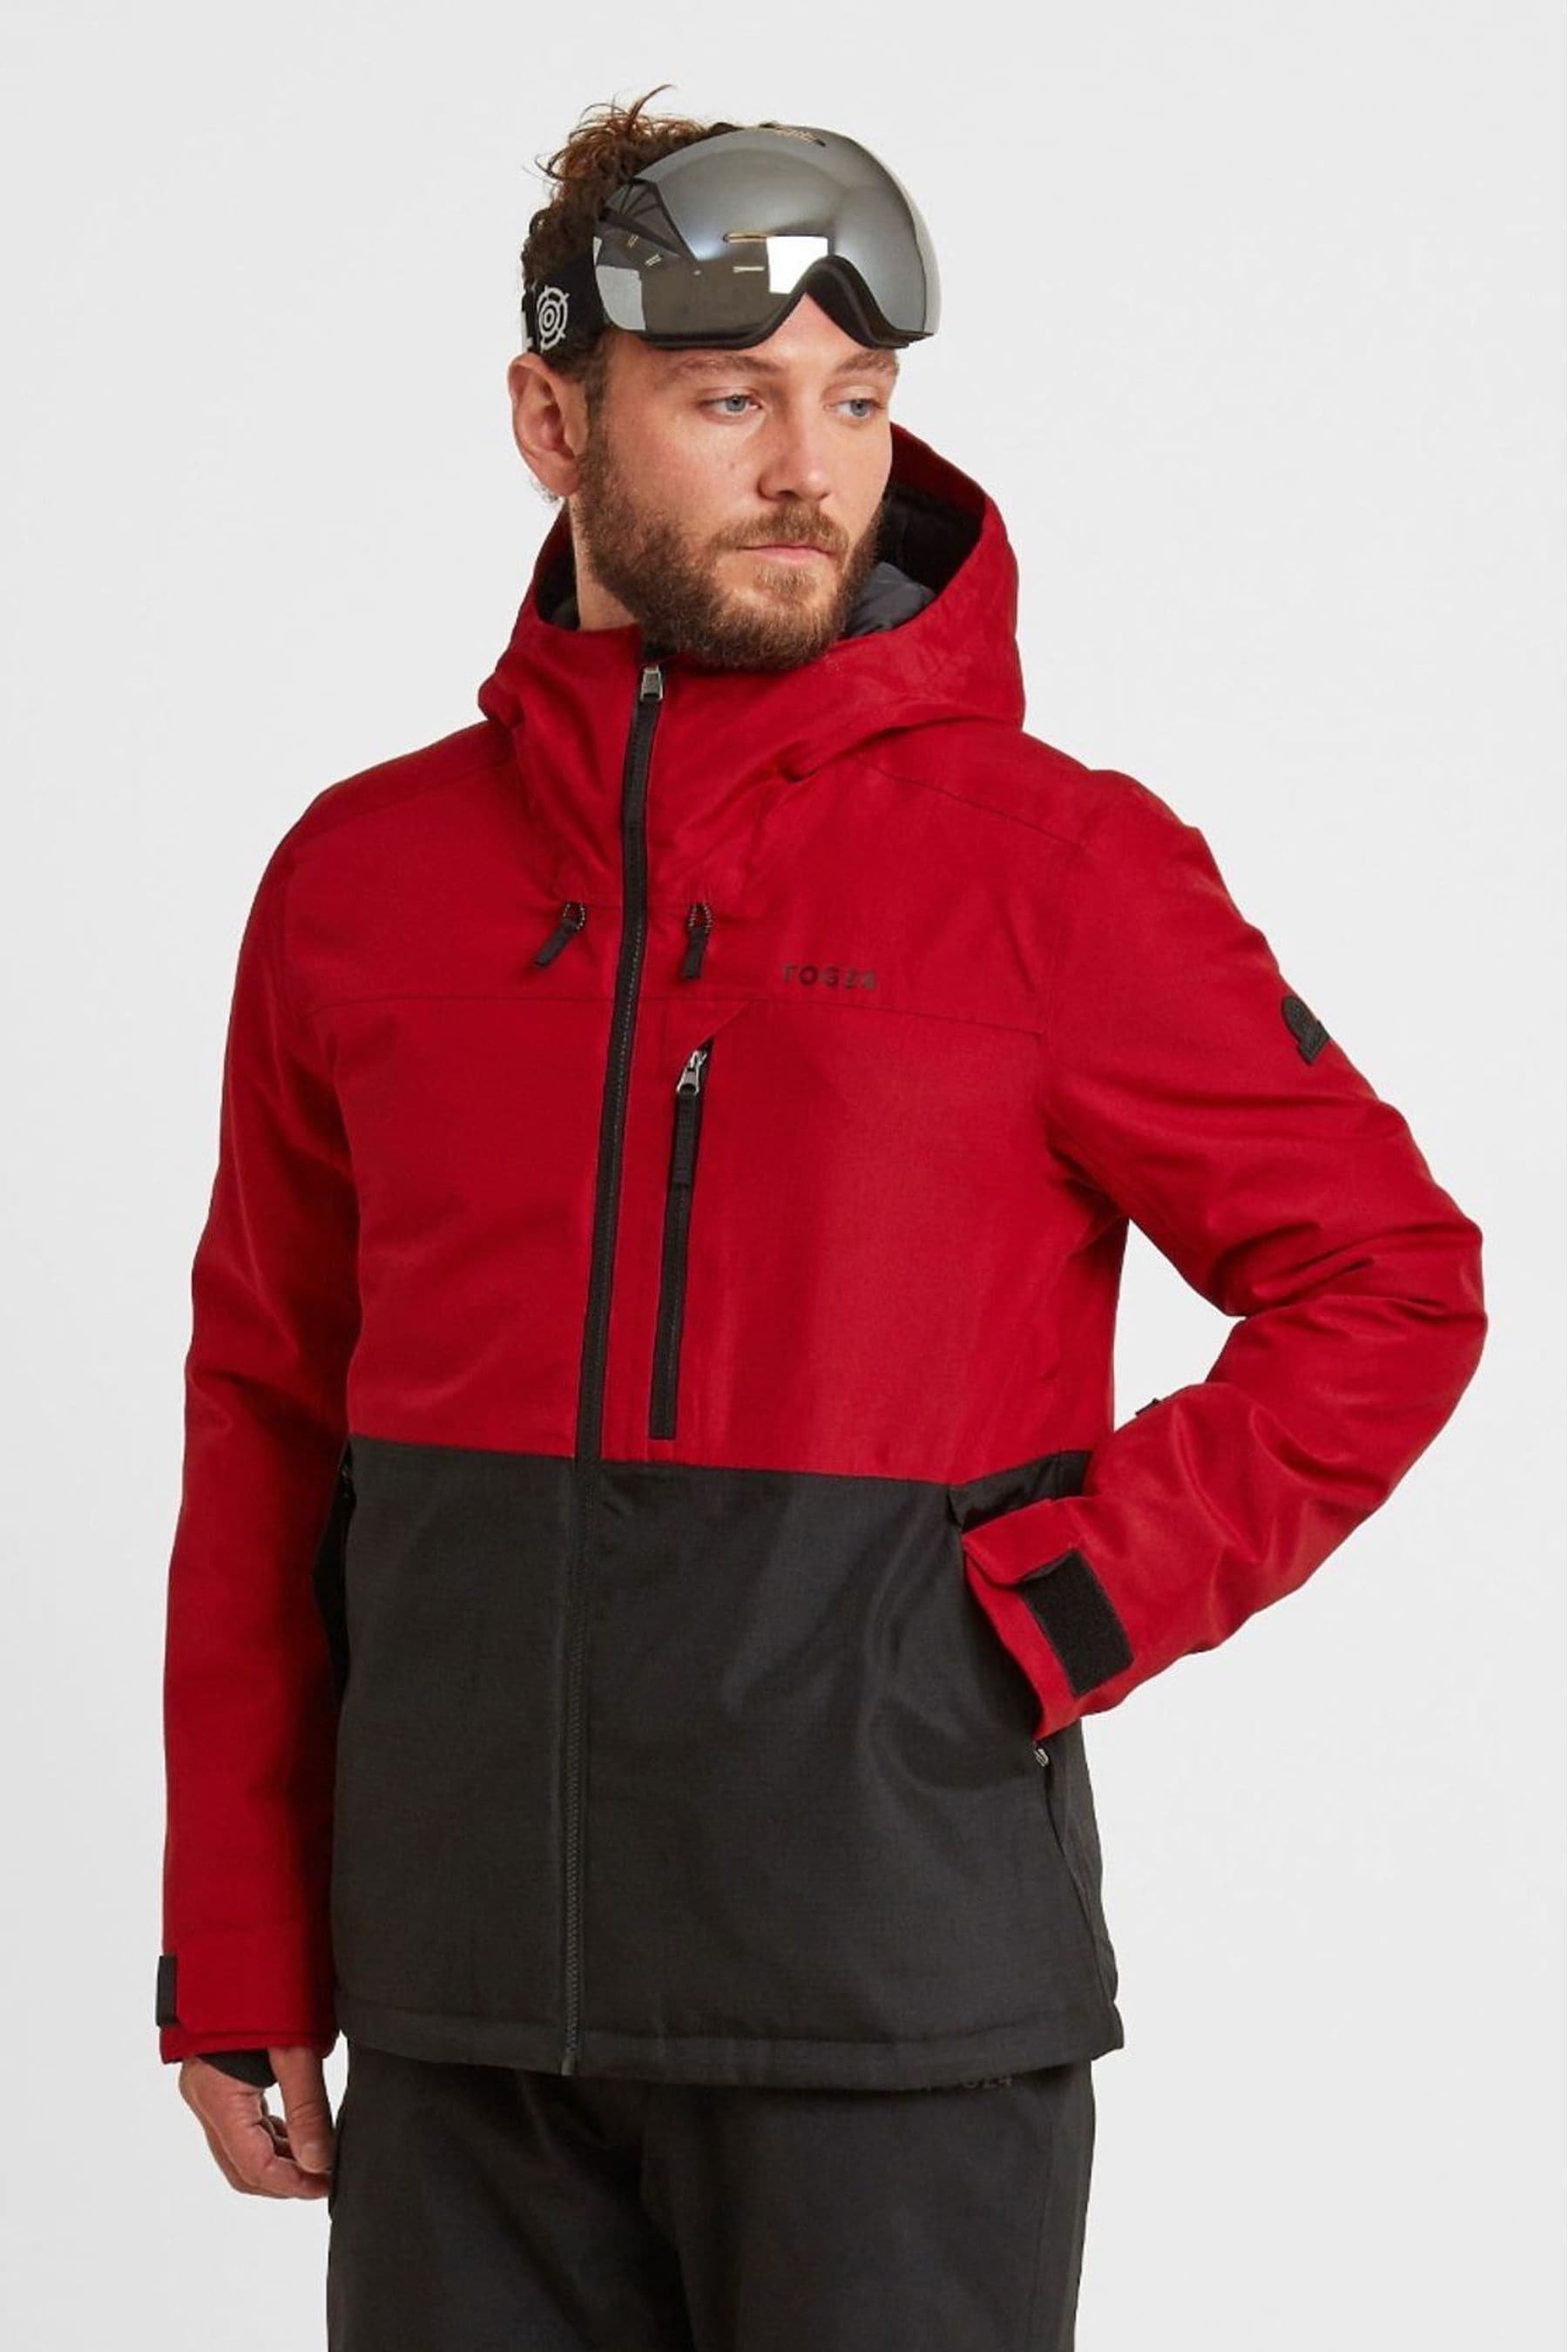 Buy Tog 24 Hail High Performance Ski Jacket from the Next UK online shop